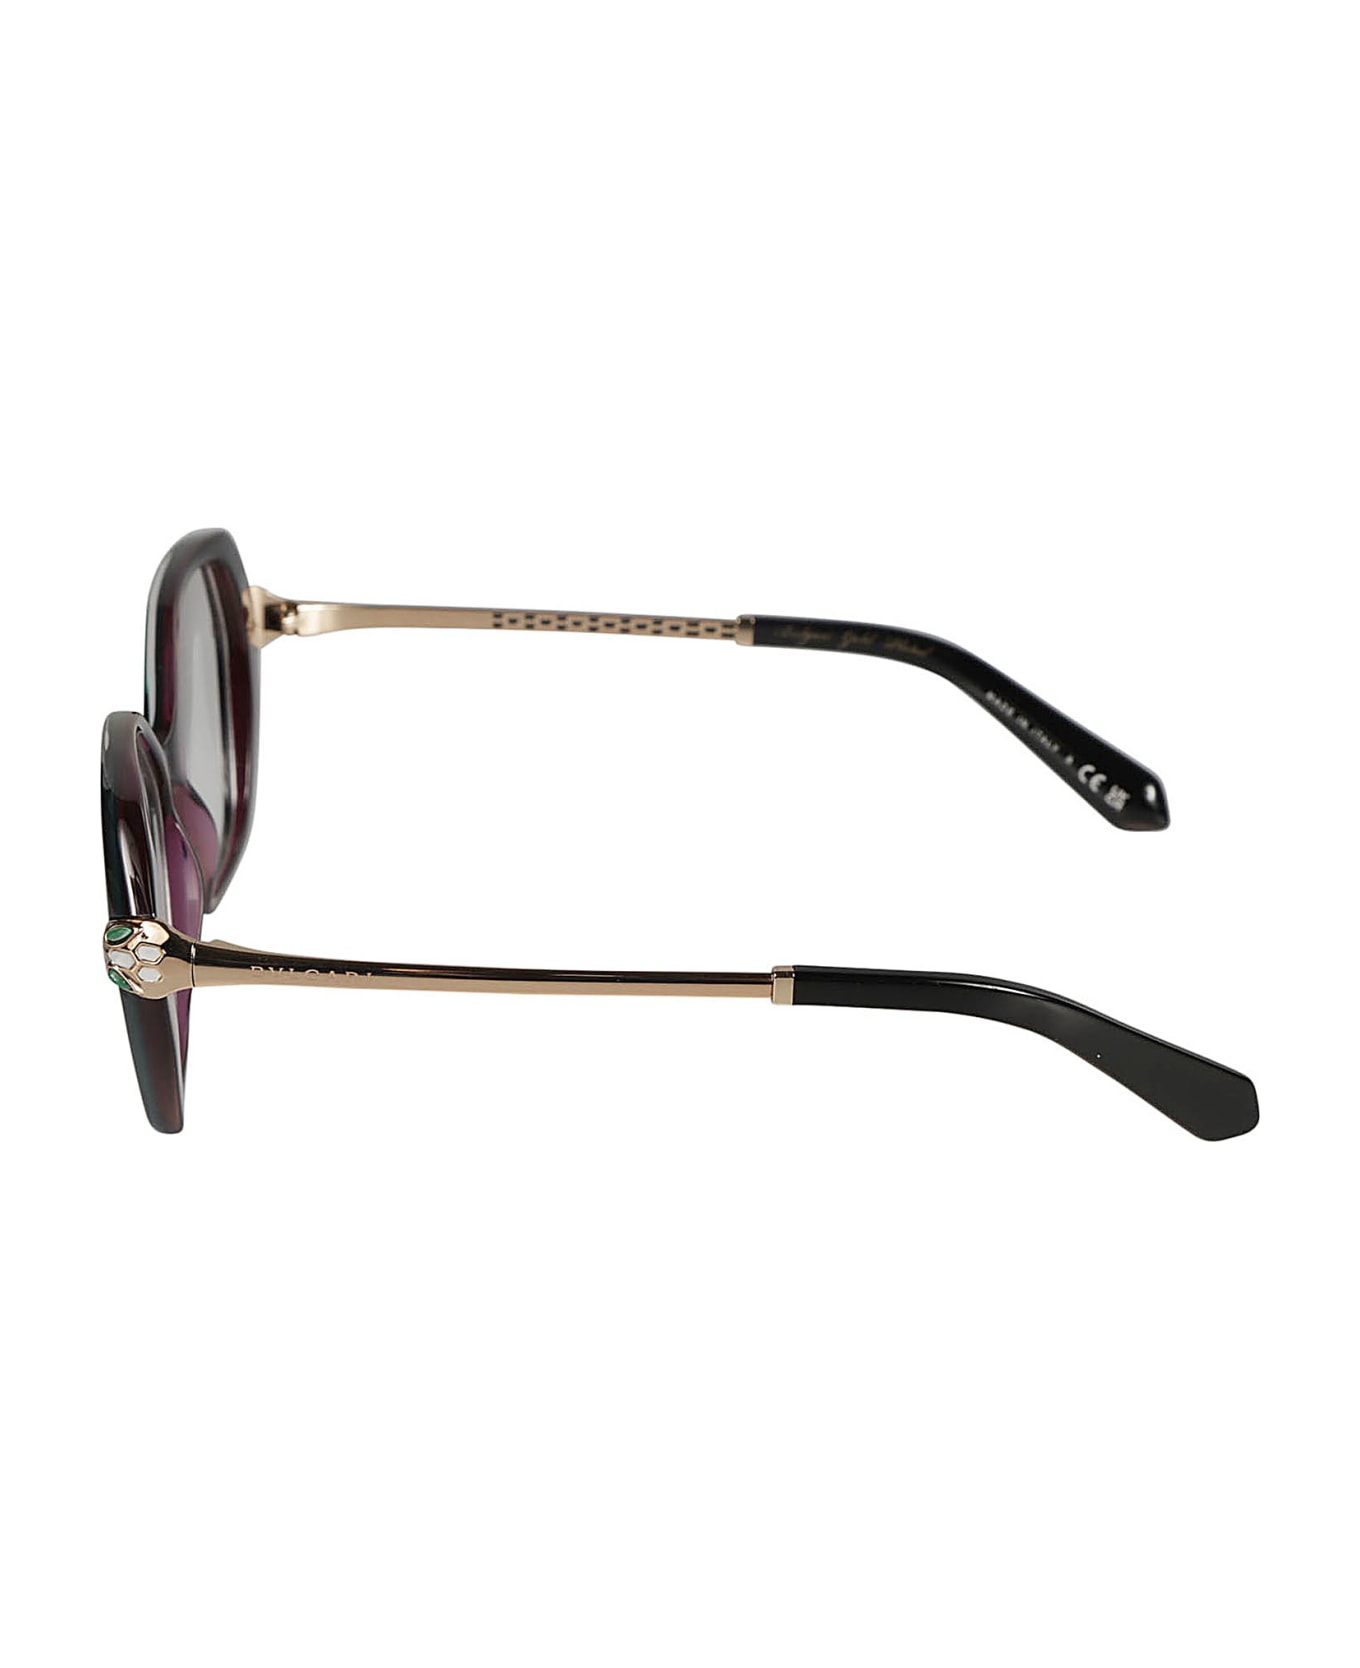 Bulgari Rectangular Rim Glasses - 5485 アイウェア